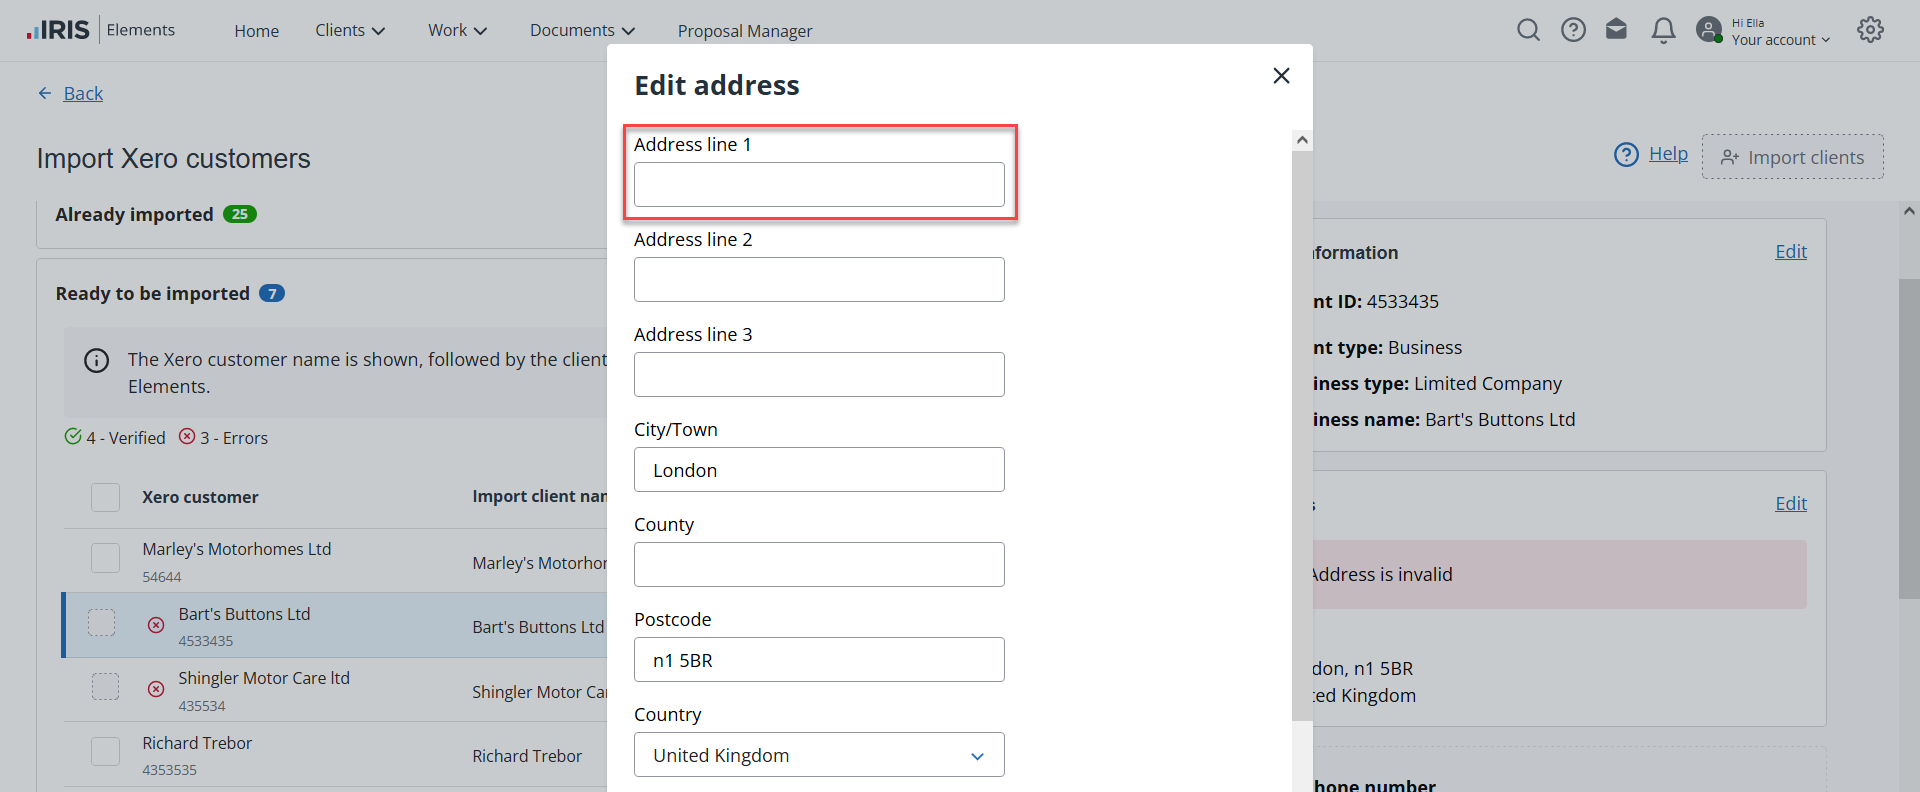 Edit address window in Xero import tool